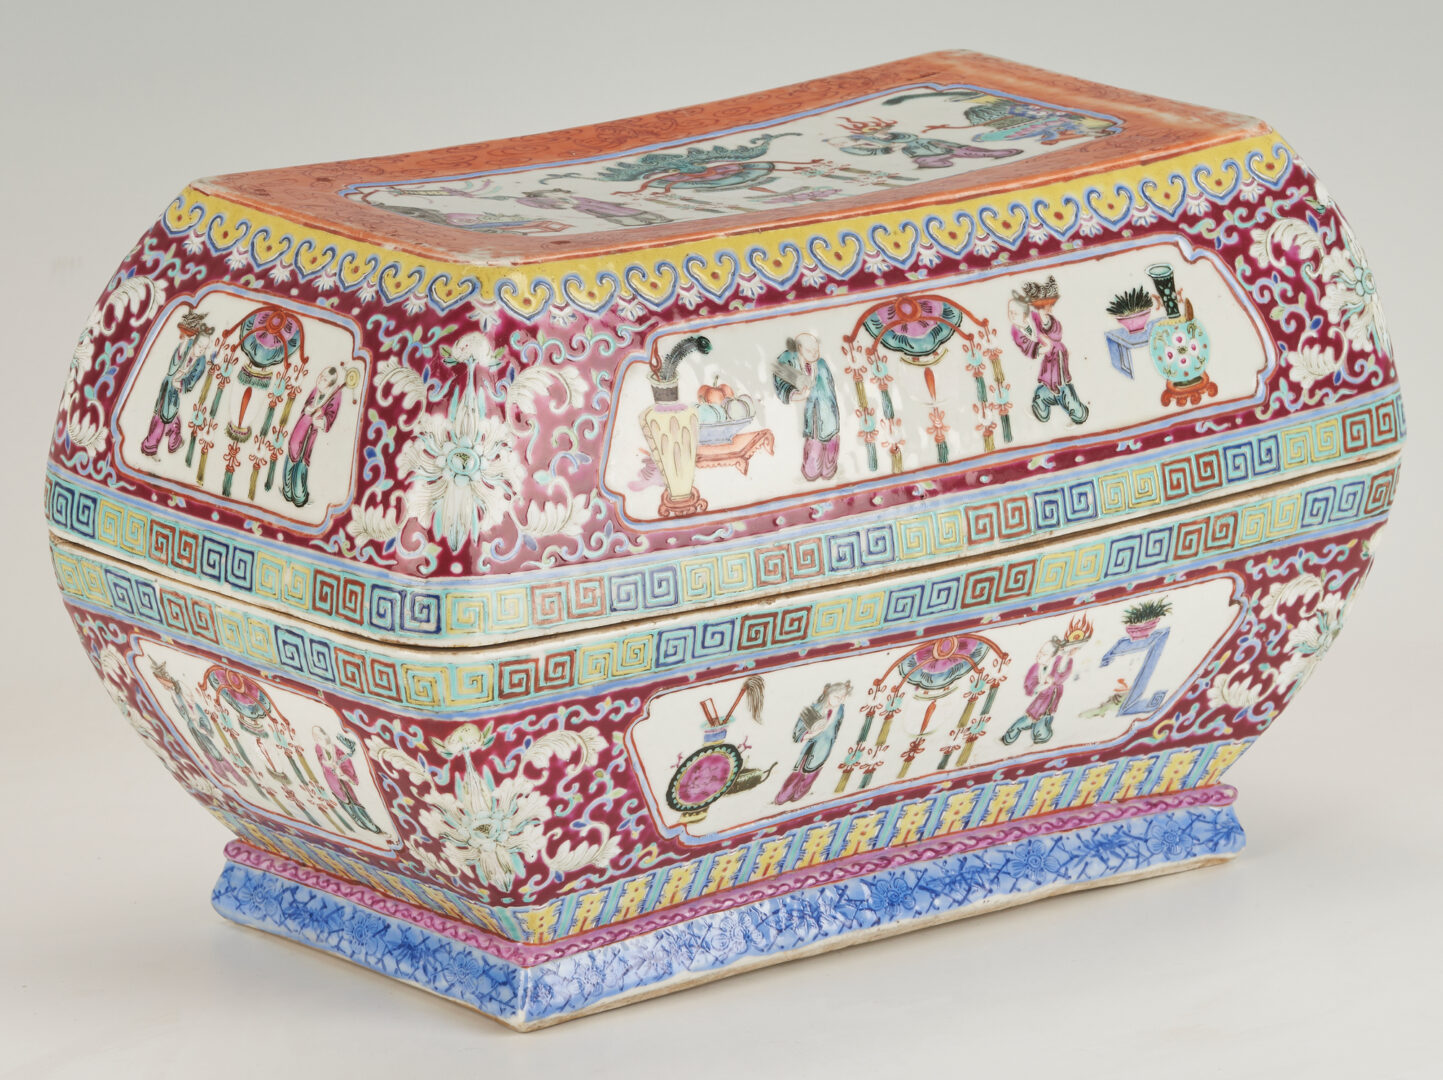 Lot 10: Large Qing Chinese Famille Rose Porcelain Box